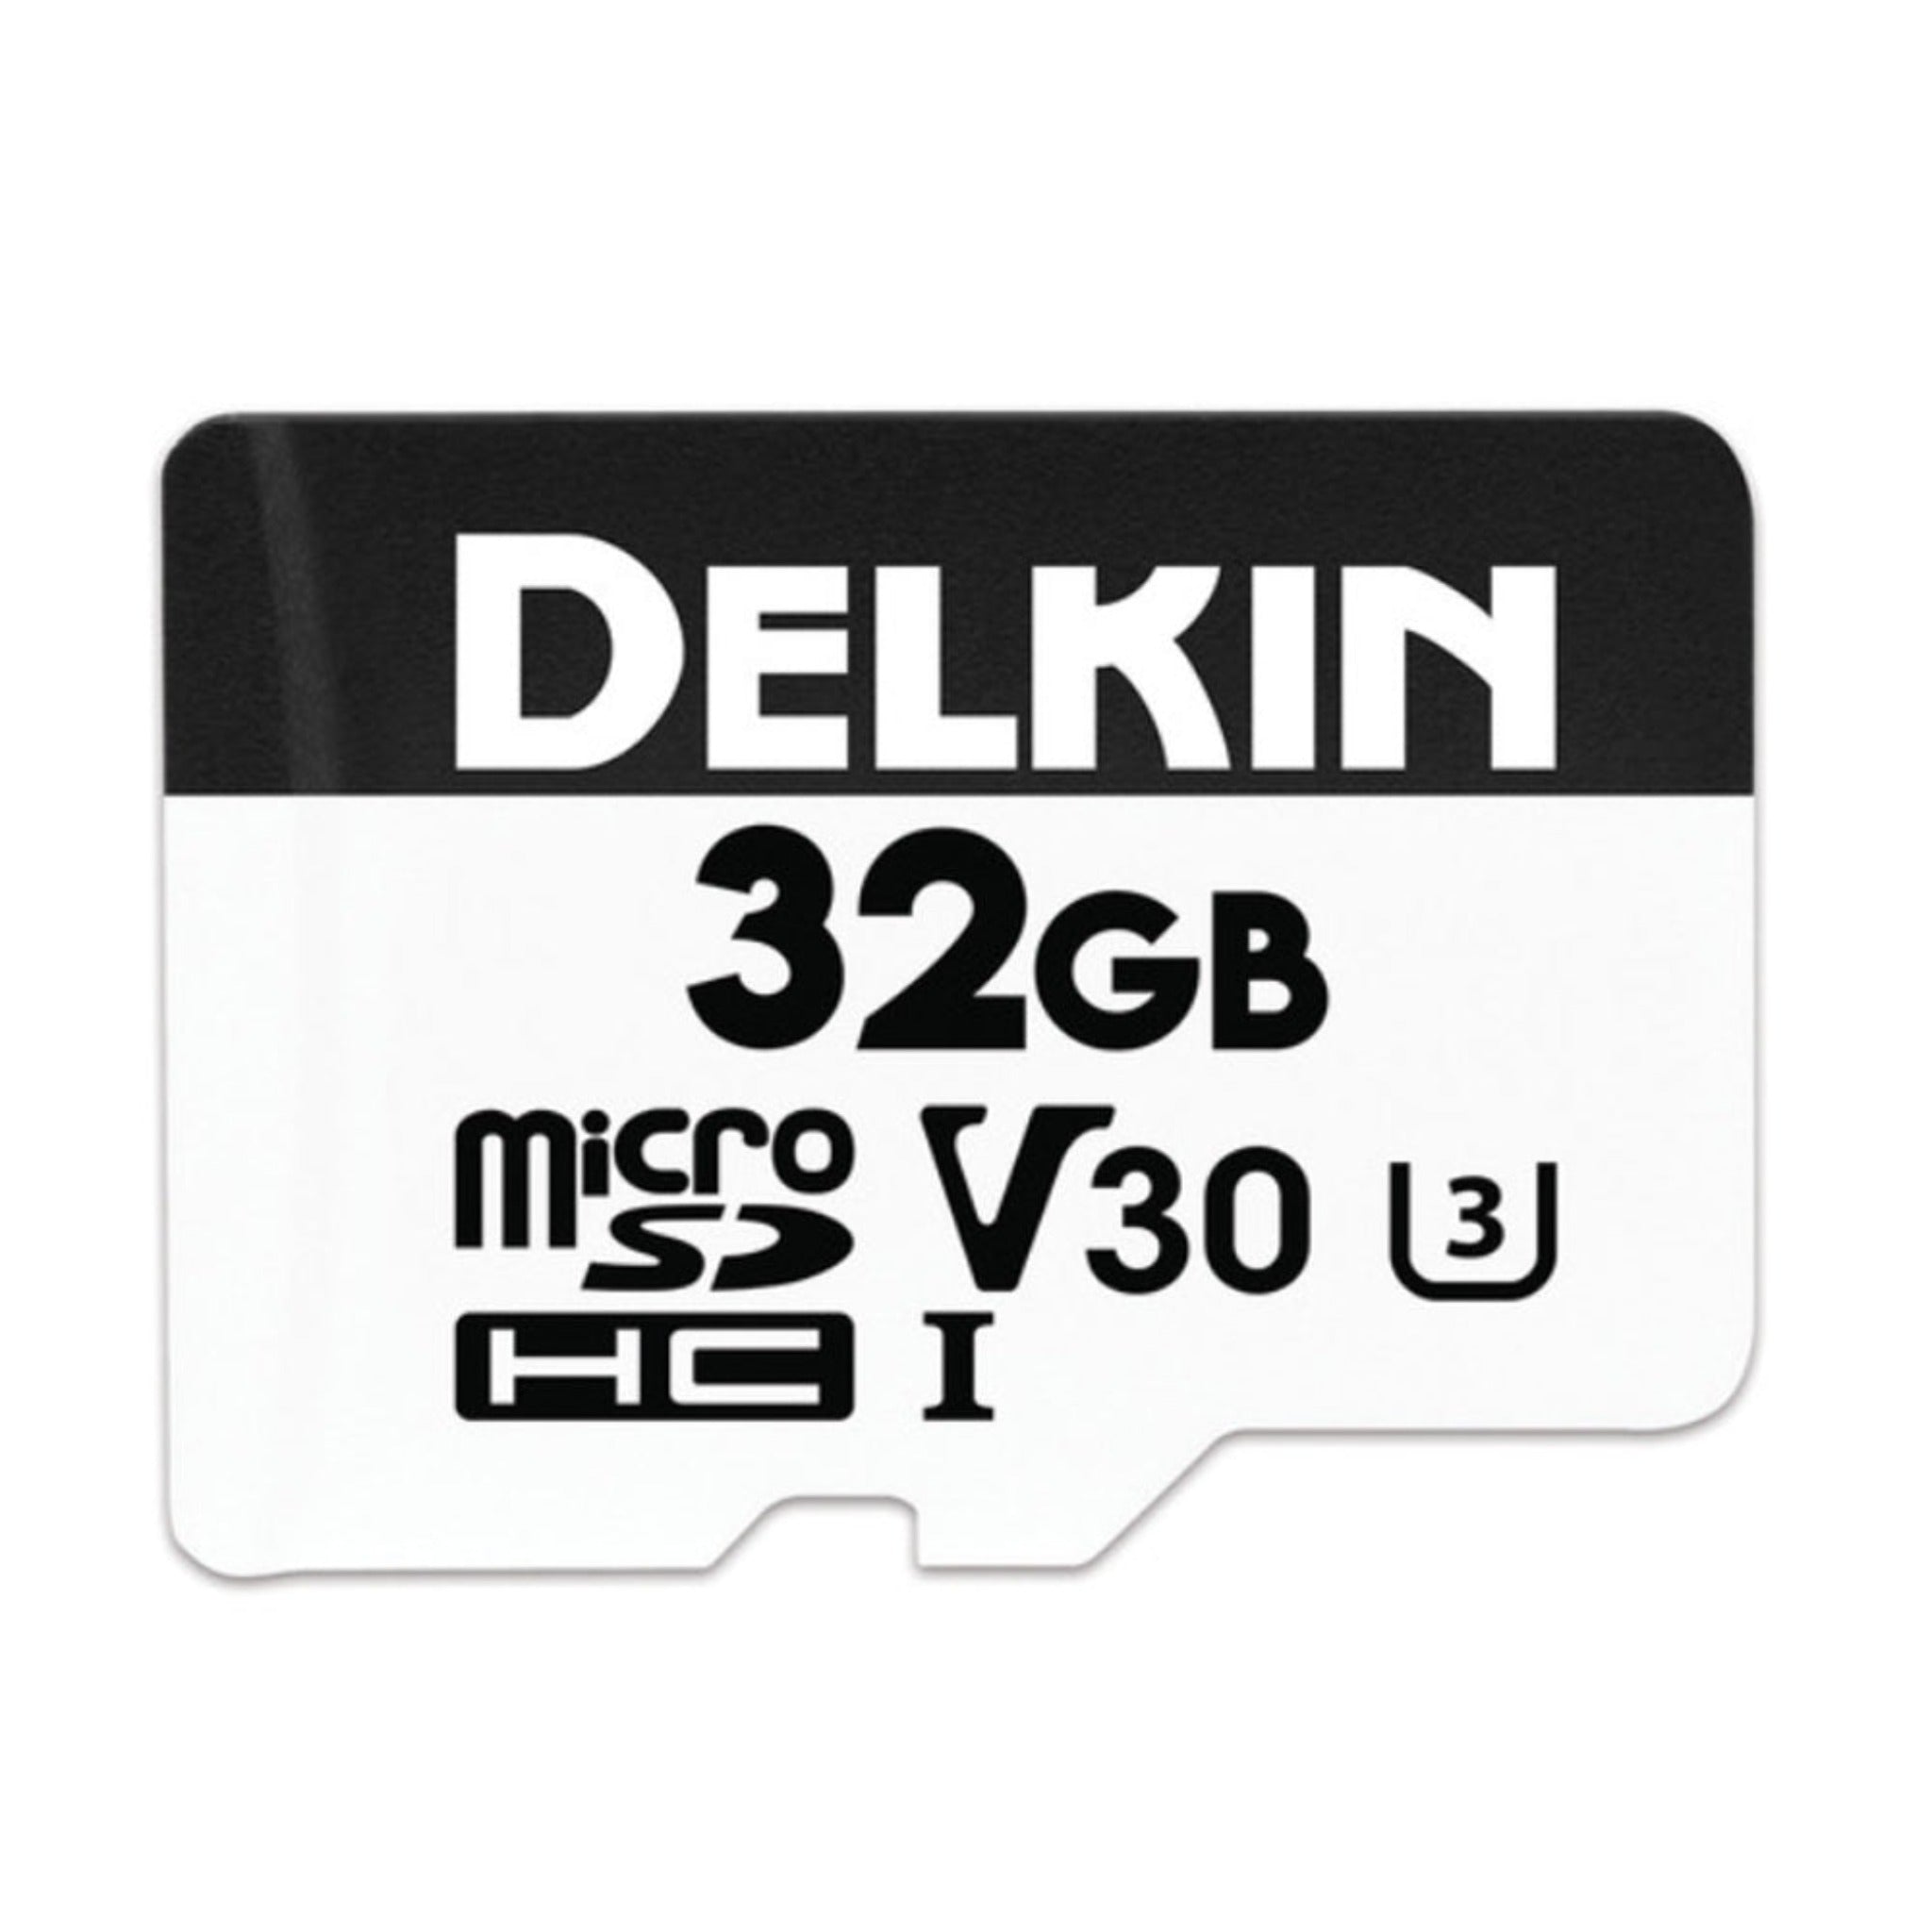 Delkin 32GB Action Hyperspeed MicroSDHC V30